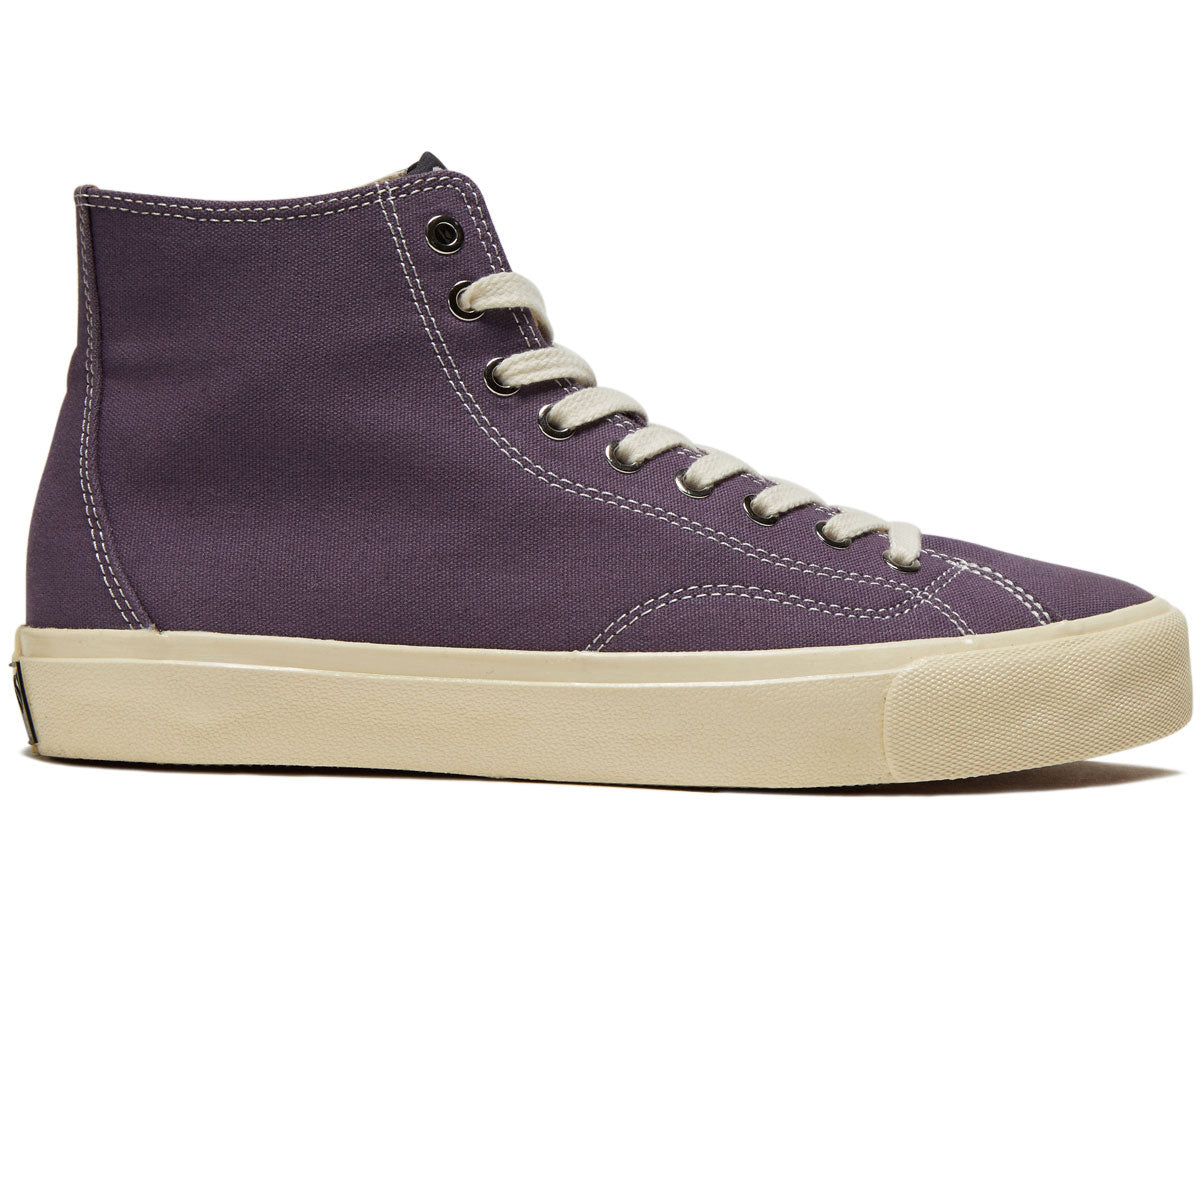 Last Resort AB VM003 Hi Canvas Shoes - Purple Haze/White image 1